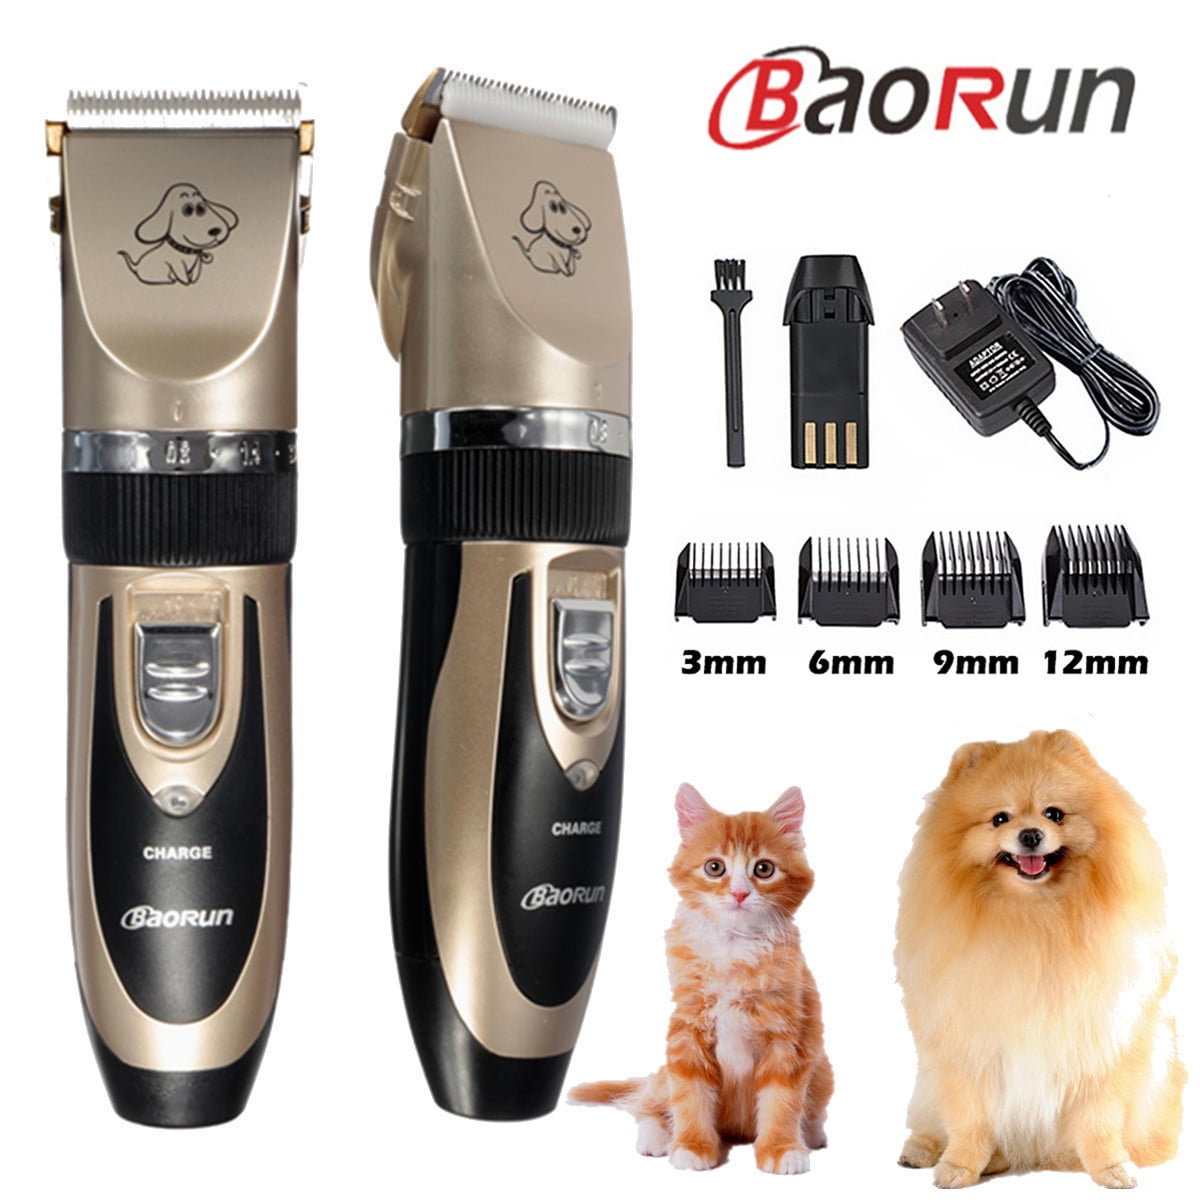 baorun dog clippers reviews